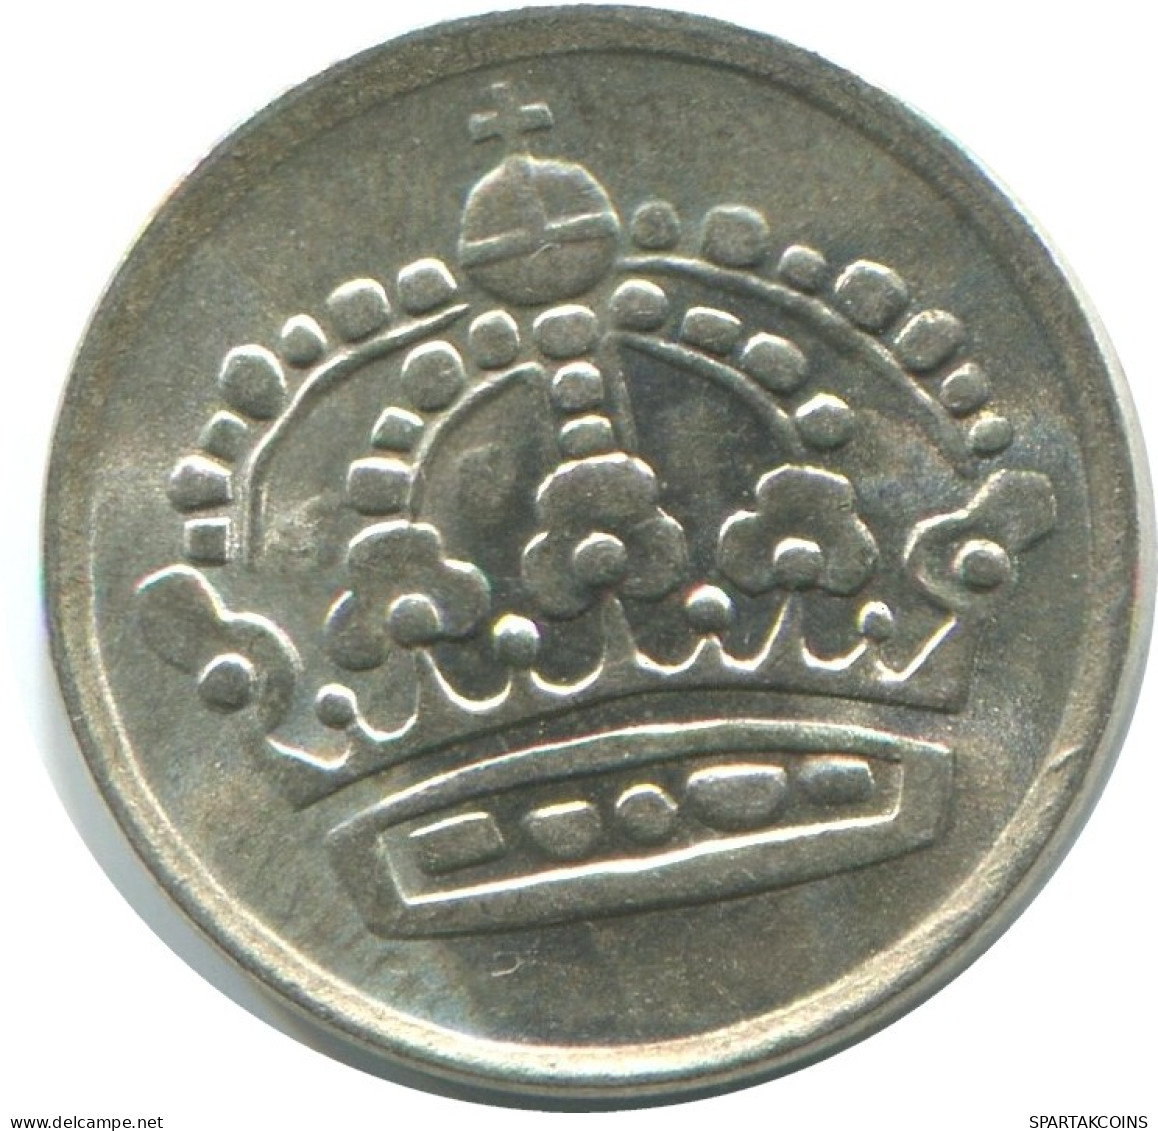 10 ORE 1955 SWEDEN SILVER Coin #AD053.2.U.A - Sweden